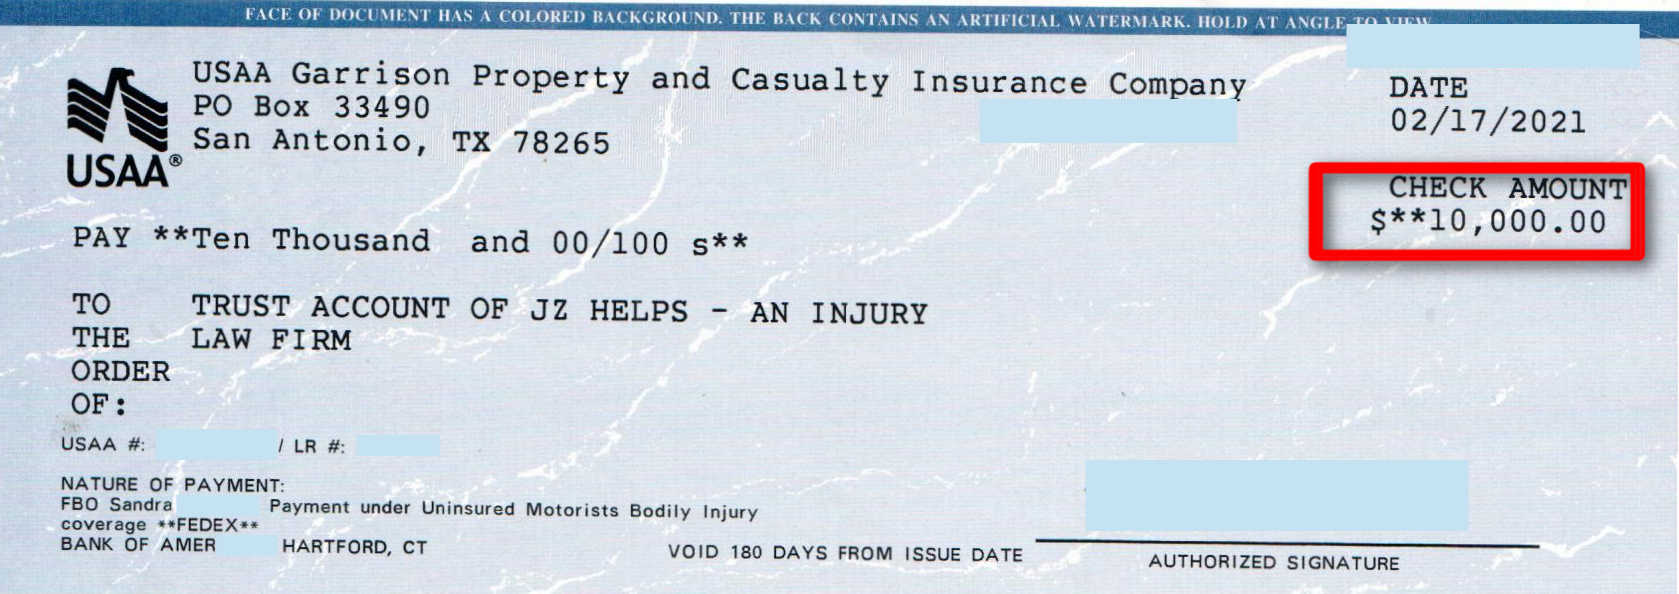 USAA $10K uninsured motorist insurance bodily injury settlement check